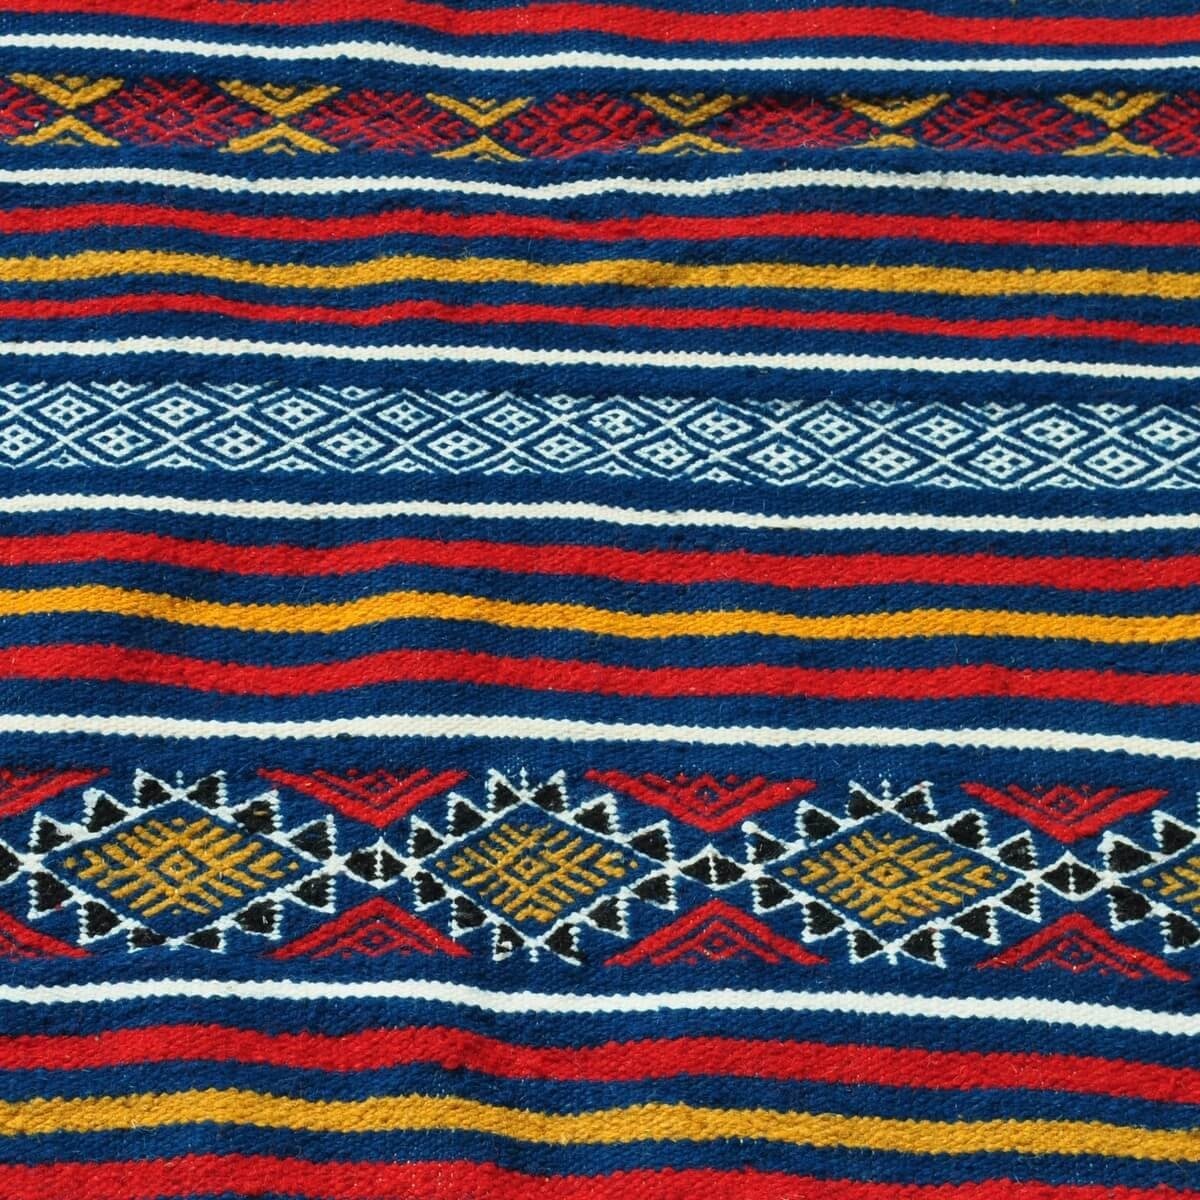 Berber tapijt Tapijt Kilim Moknine 135x230 Blauw/Jeel/Rood (Handgeweven, Wol, Tunesië) Tunesisch kilimdeken, Marokkaanse stijl. 